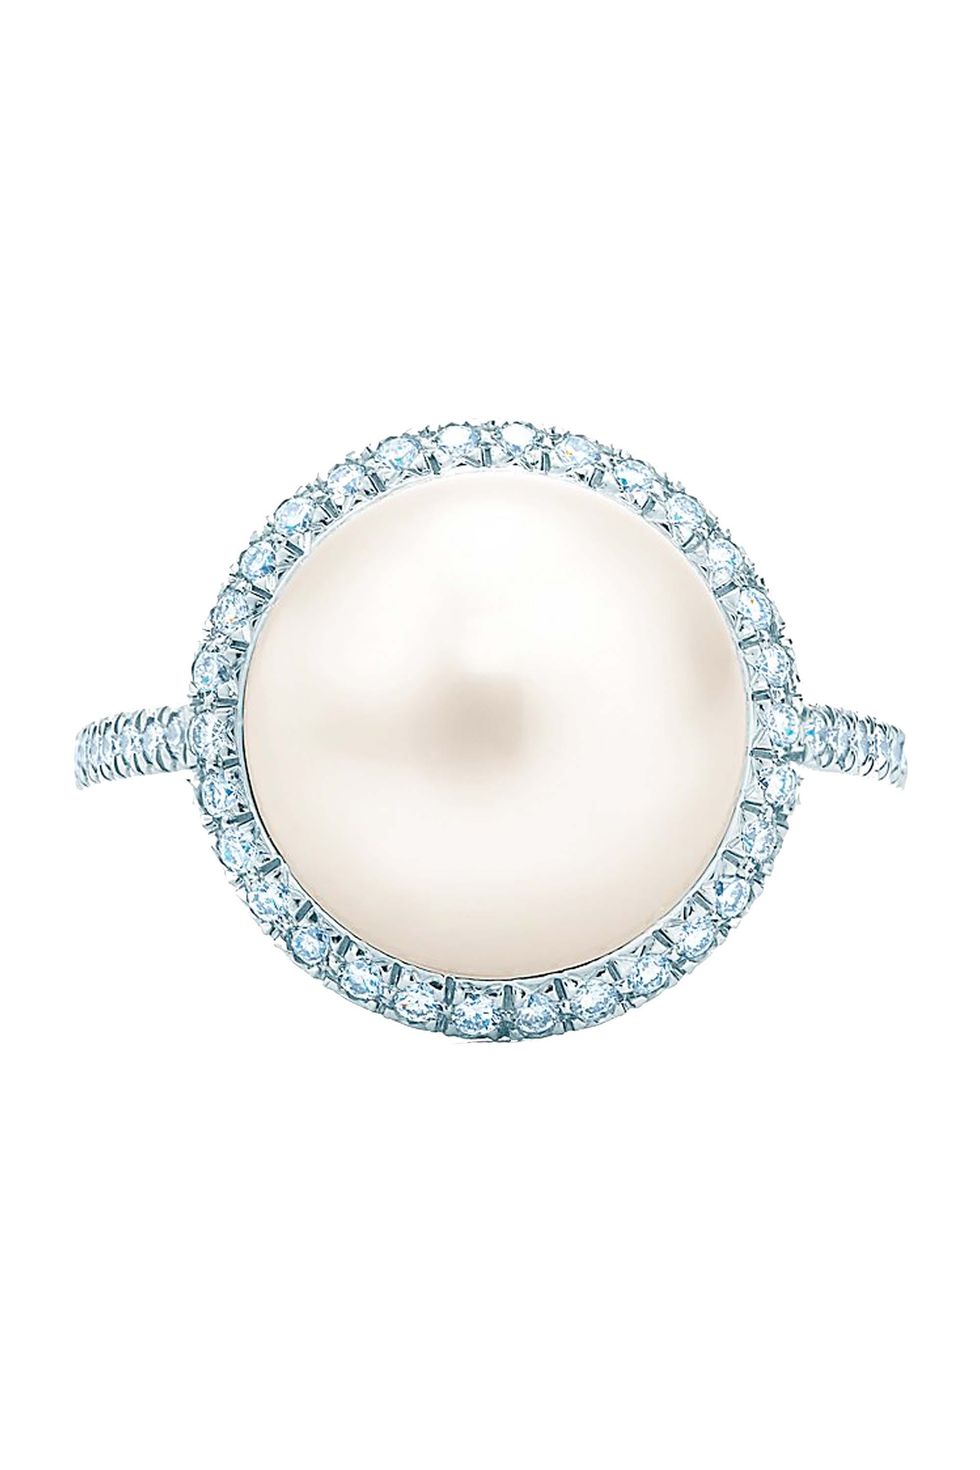 珍珠戒指推薦#2：Tiffany & Co